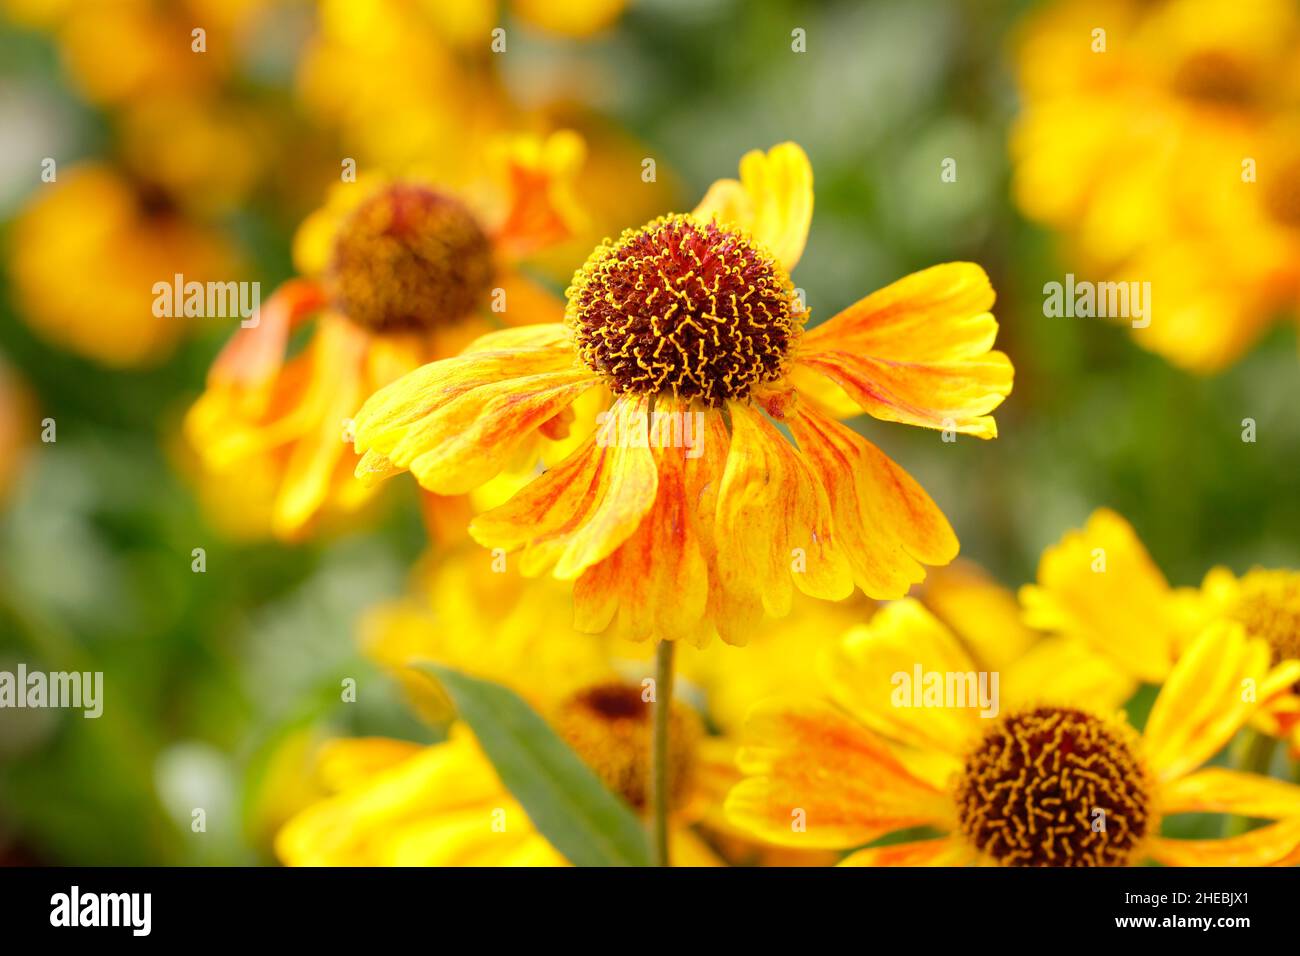 Helenium Wyndley sneezeweed fioritura nel mese di settembre. REGNO UNITO Foto Stock